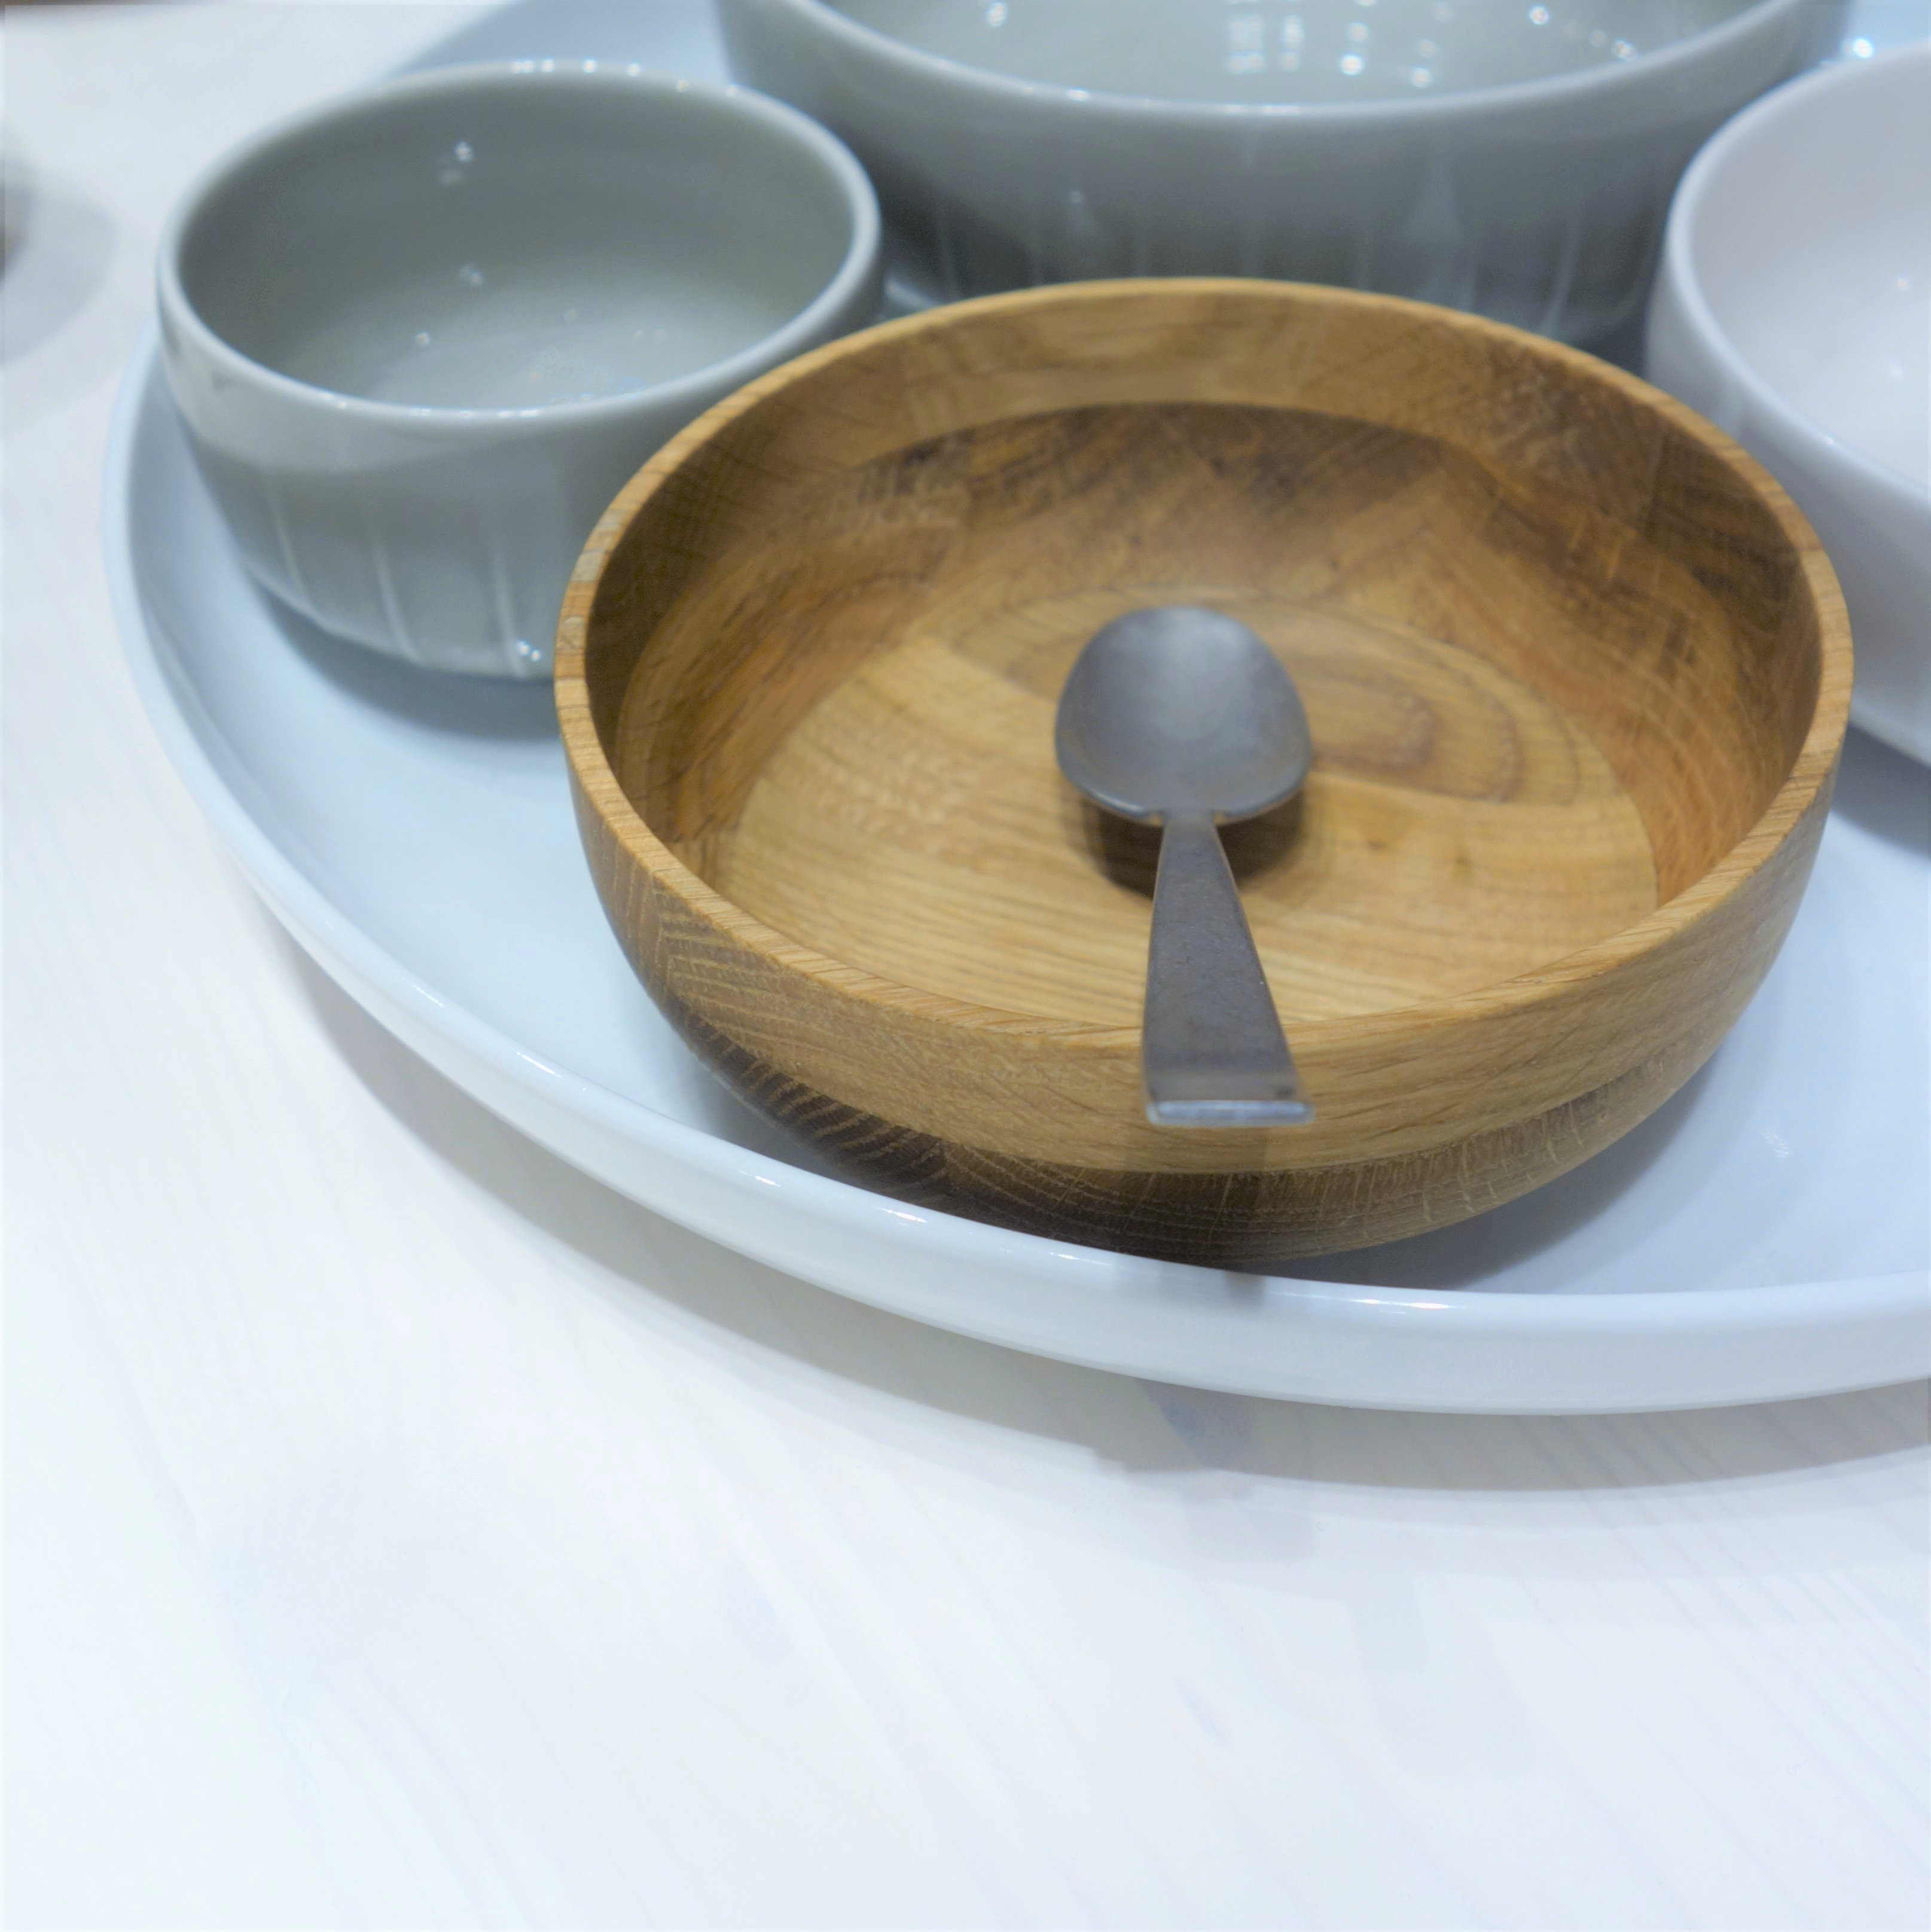 dewitt kendall wooden bowl pewter spoon translucent glaze tabletimes blog